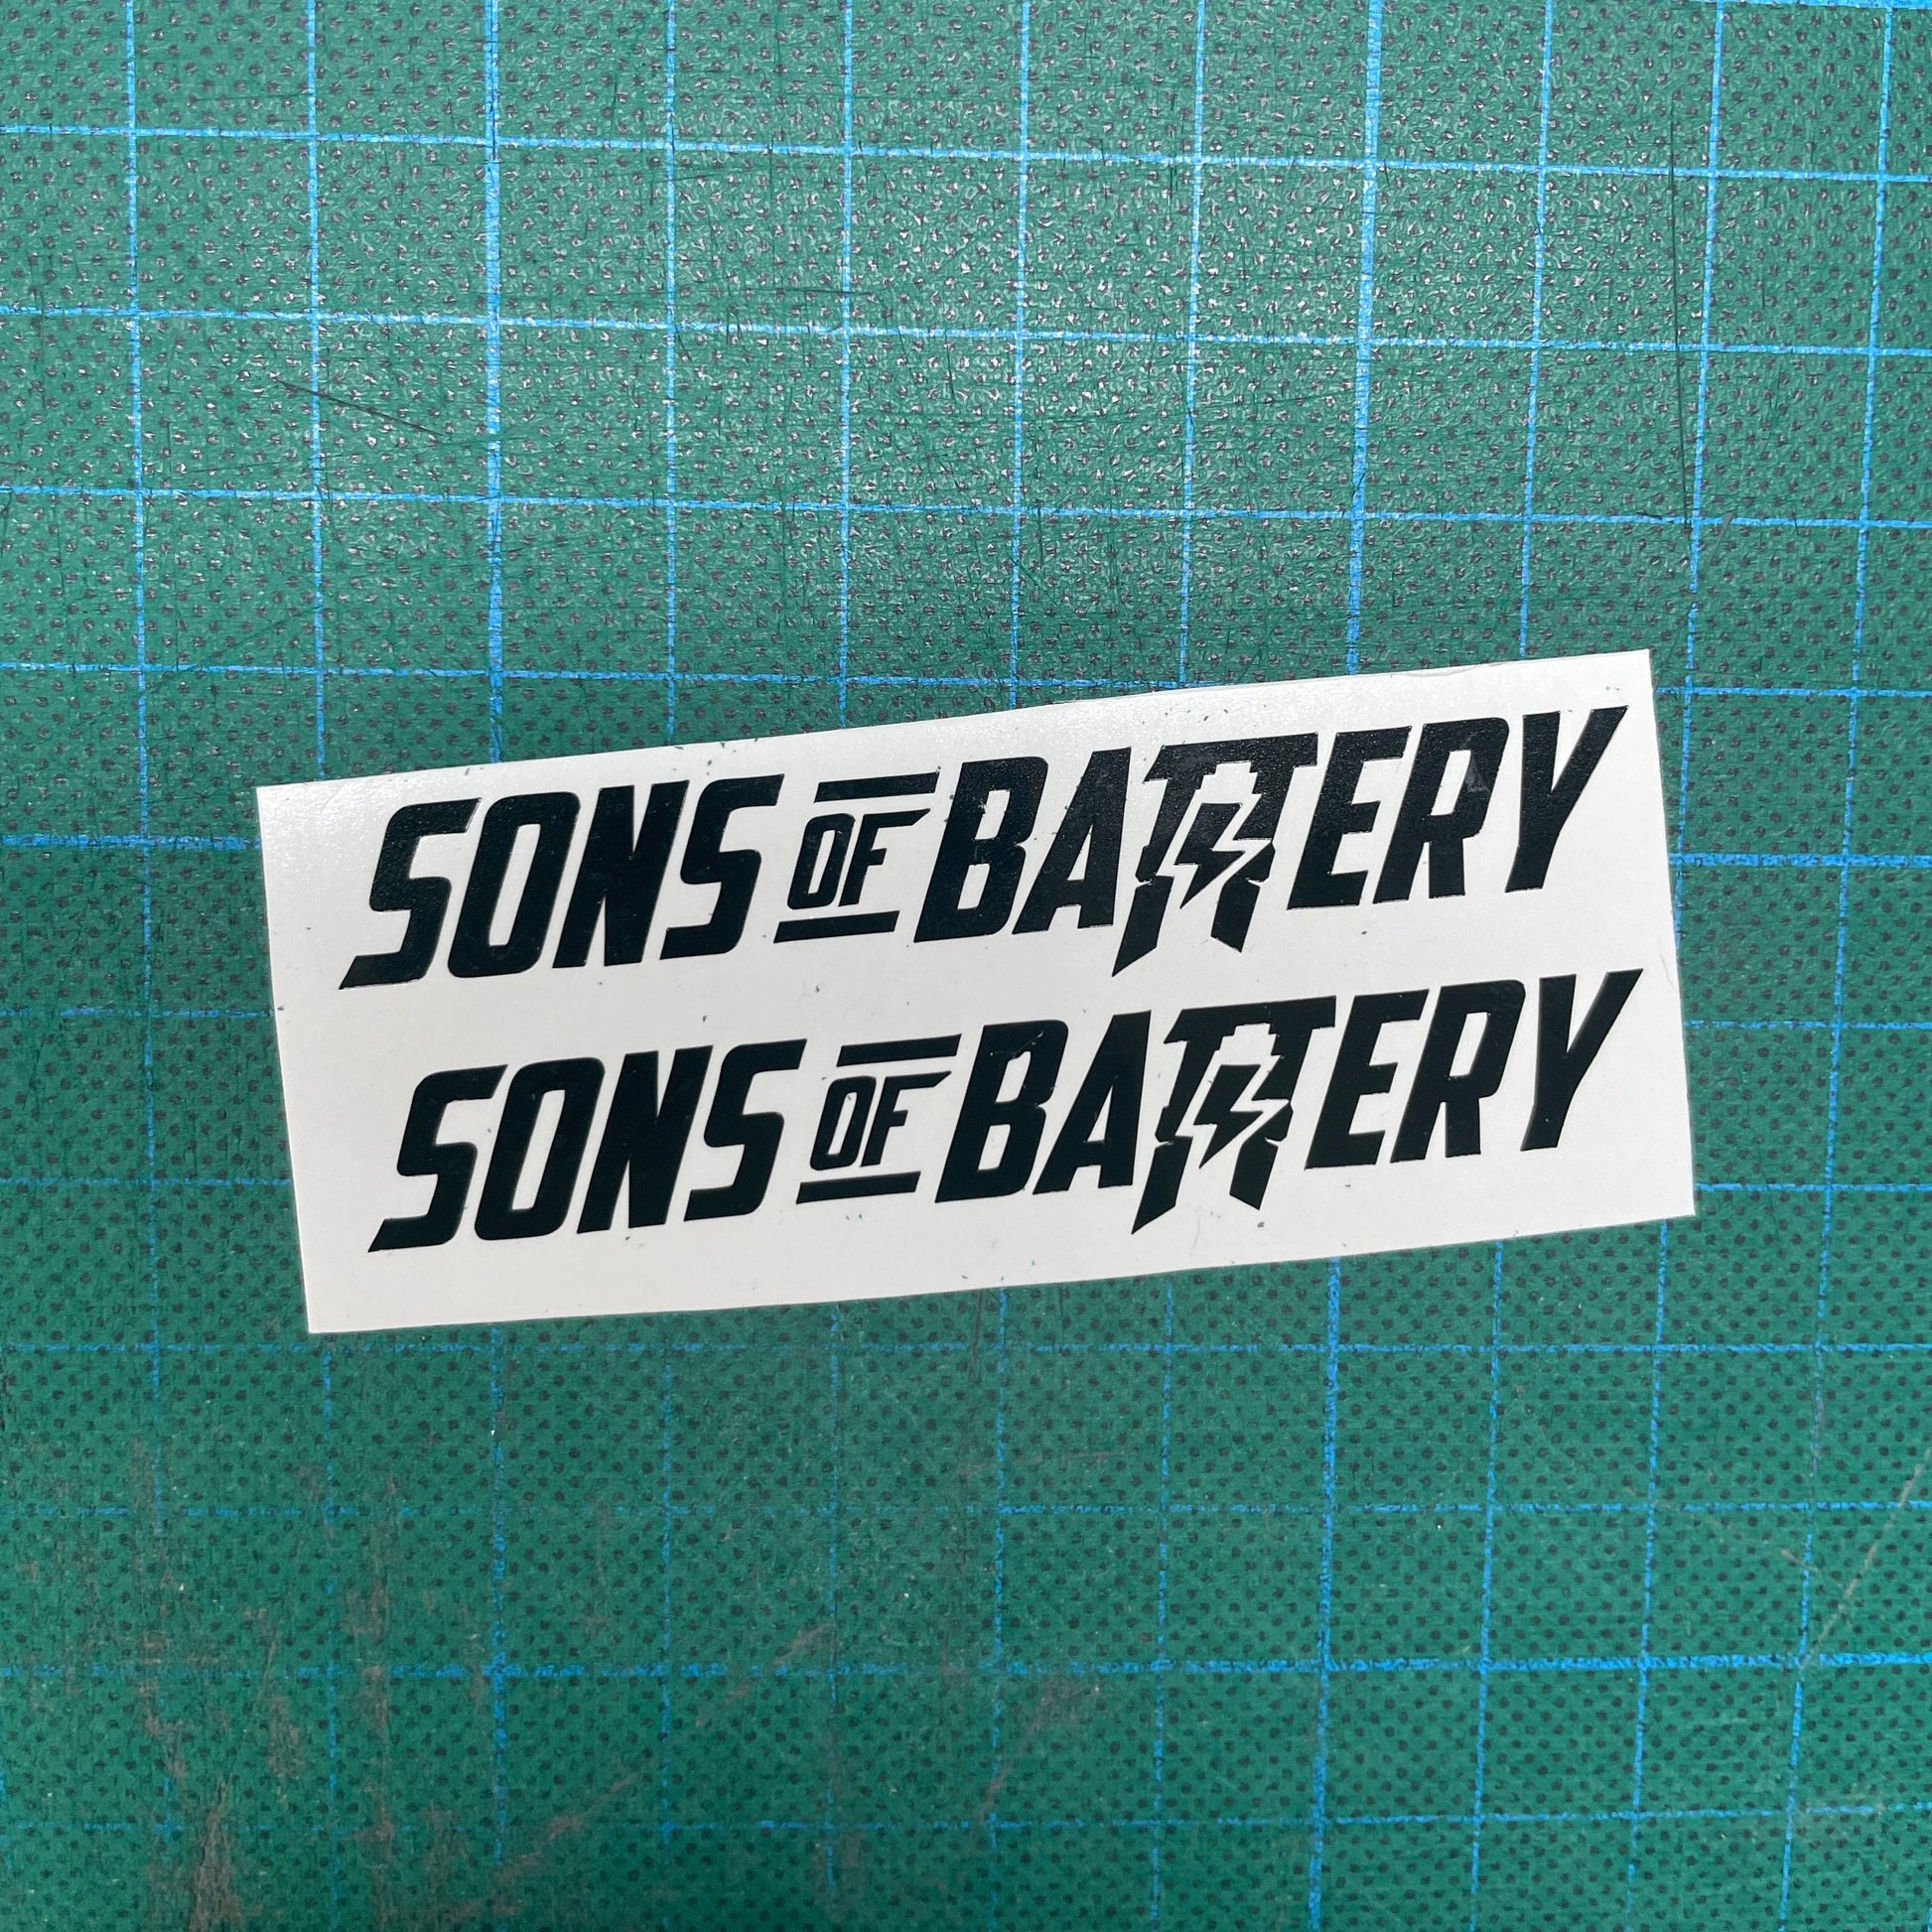 Sons of Battery - E-MTB Brand & Community Folien Schwarz / 9 x 1.6 cm Sons of Battery - Schriftzug Modern E-Bike-Community